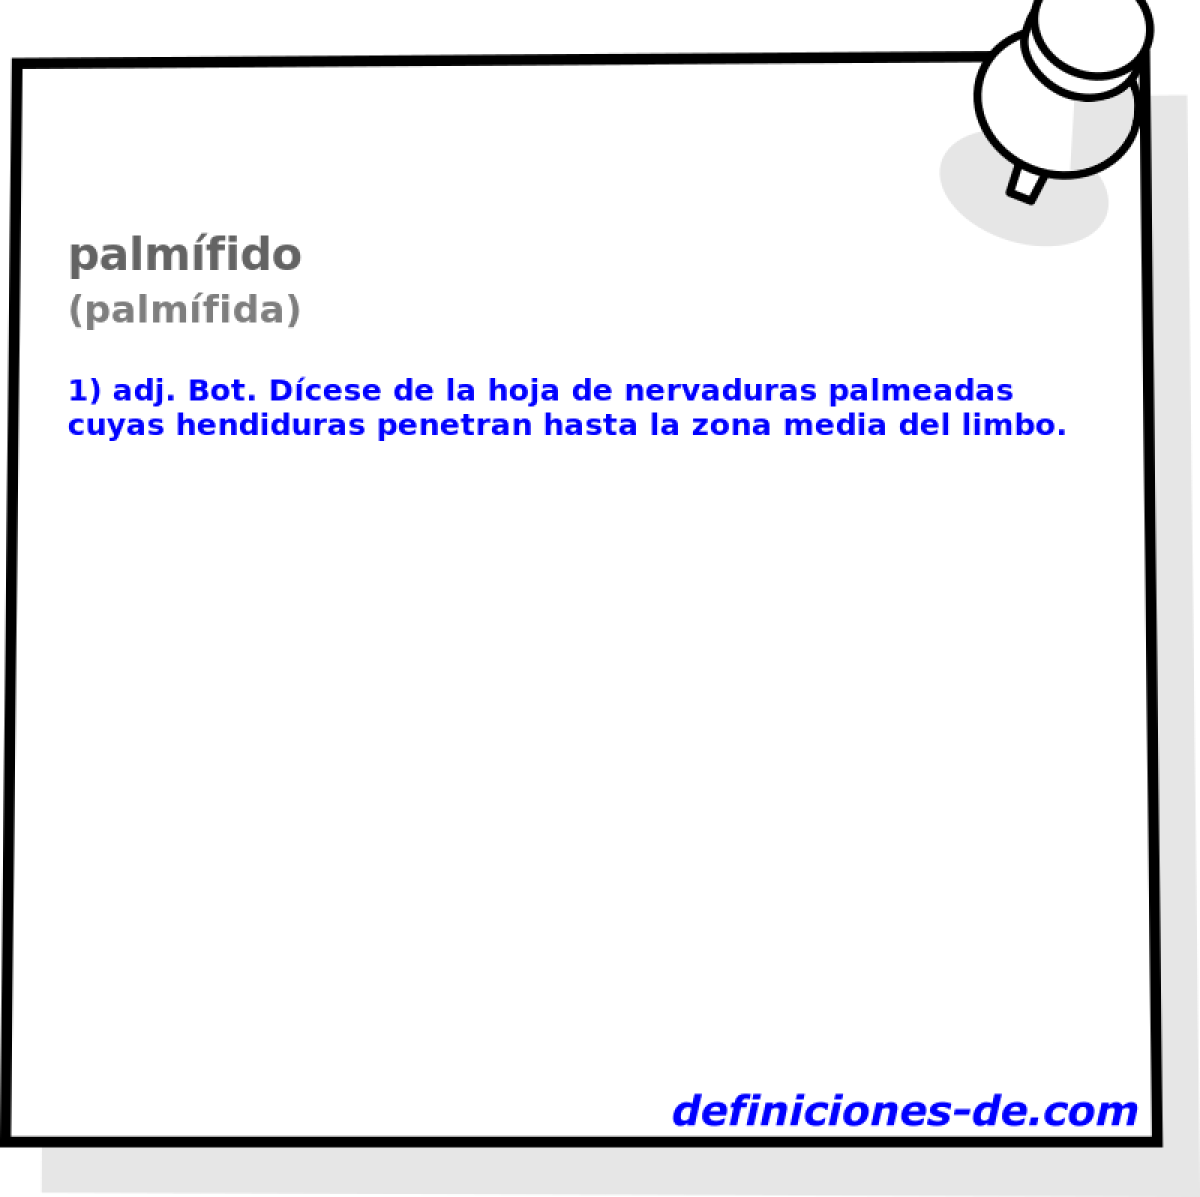 palmfido (palmfida)